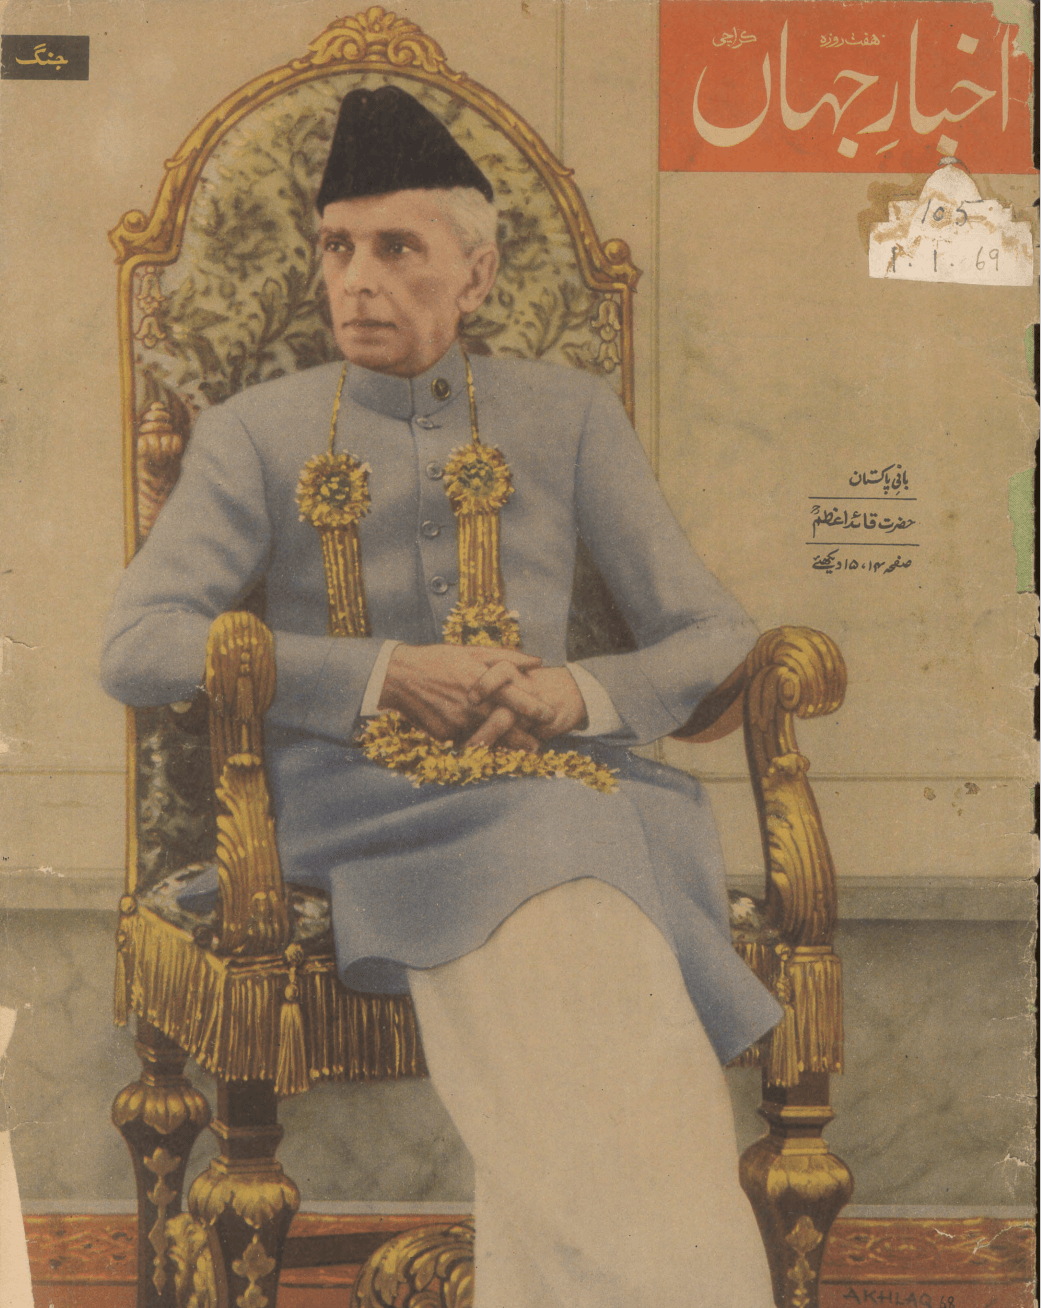 Akhbar-e-Jahan (Jan 1, 1969)